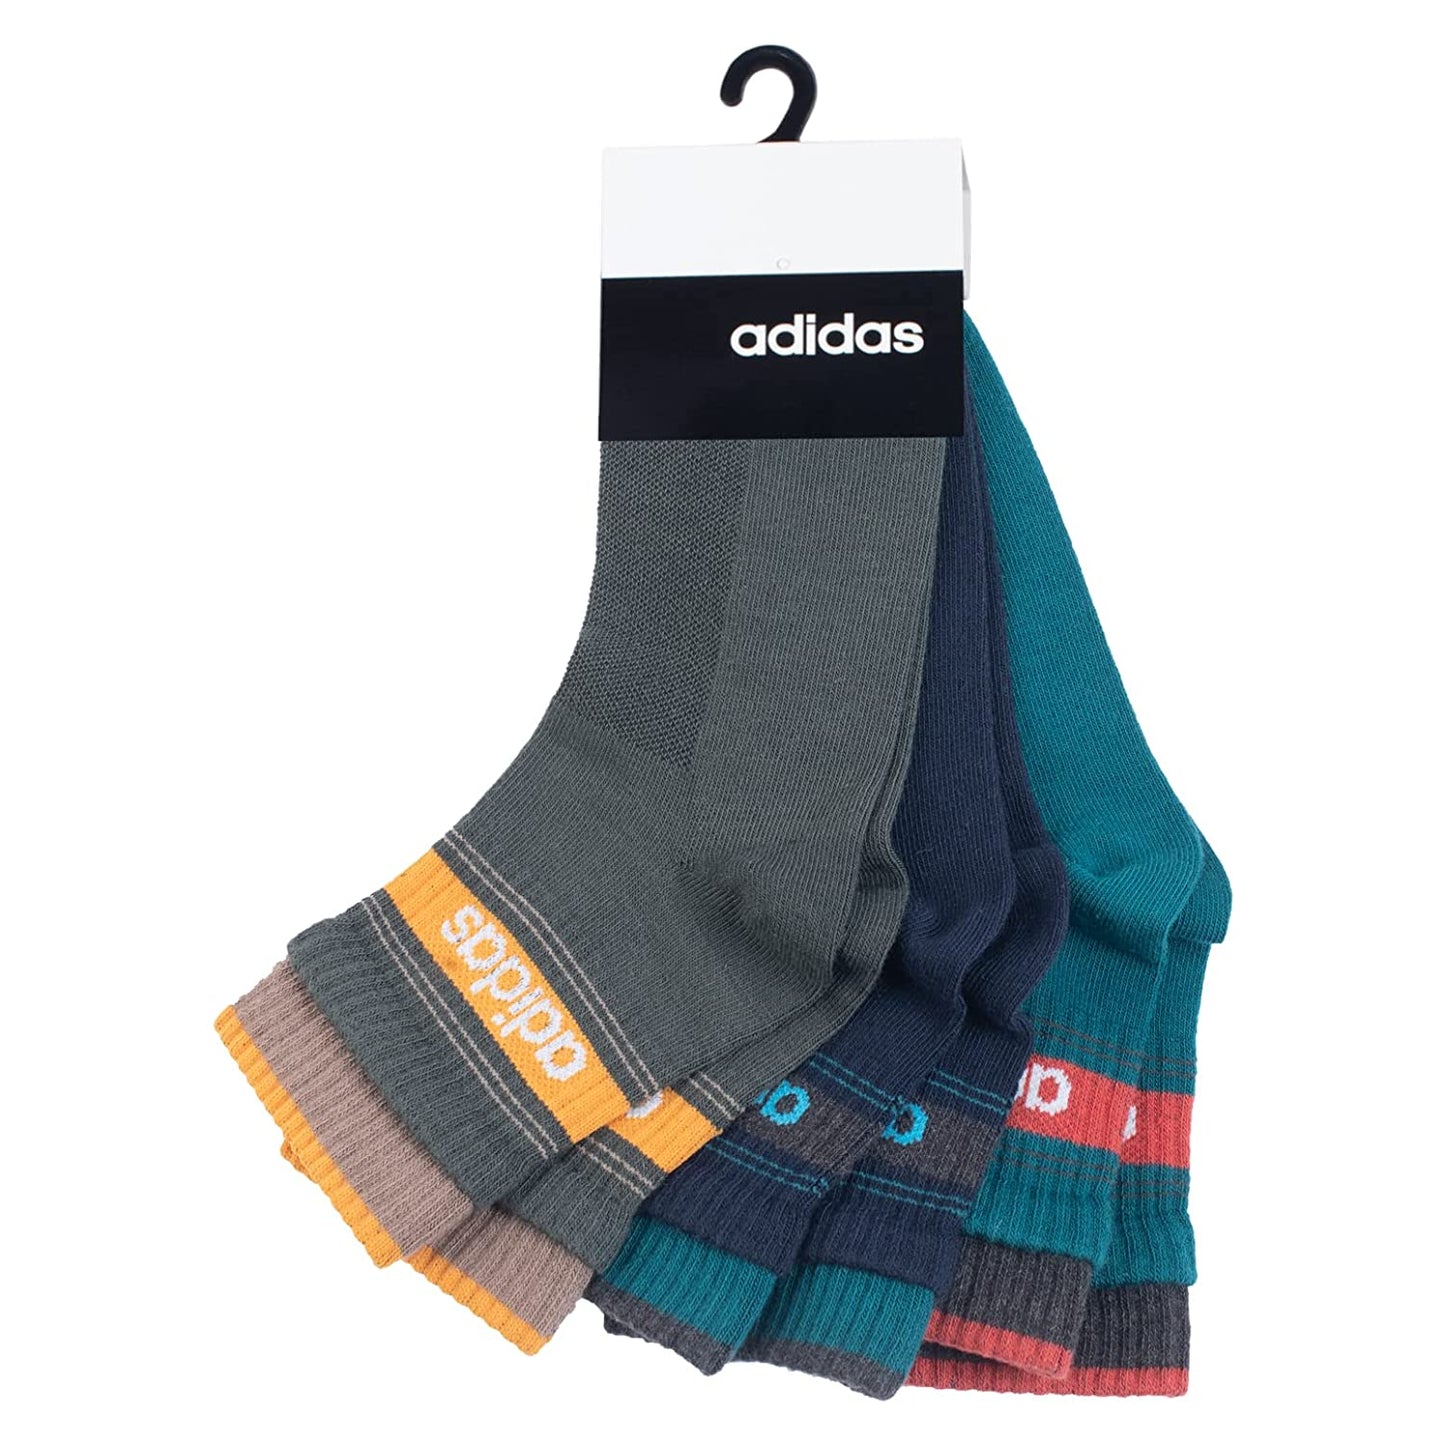 Adidas Original Flat Knit Ankle Cotton Socks, 3 Pairs - Best Price online Prokicksports.com